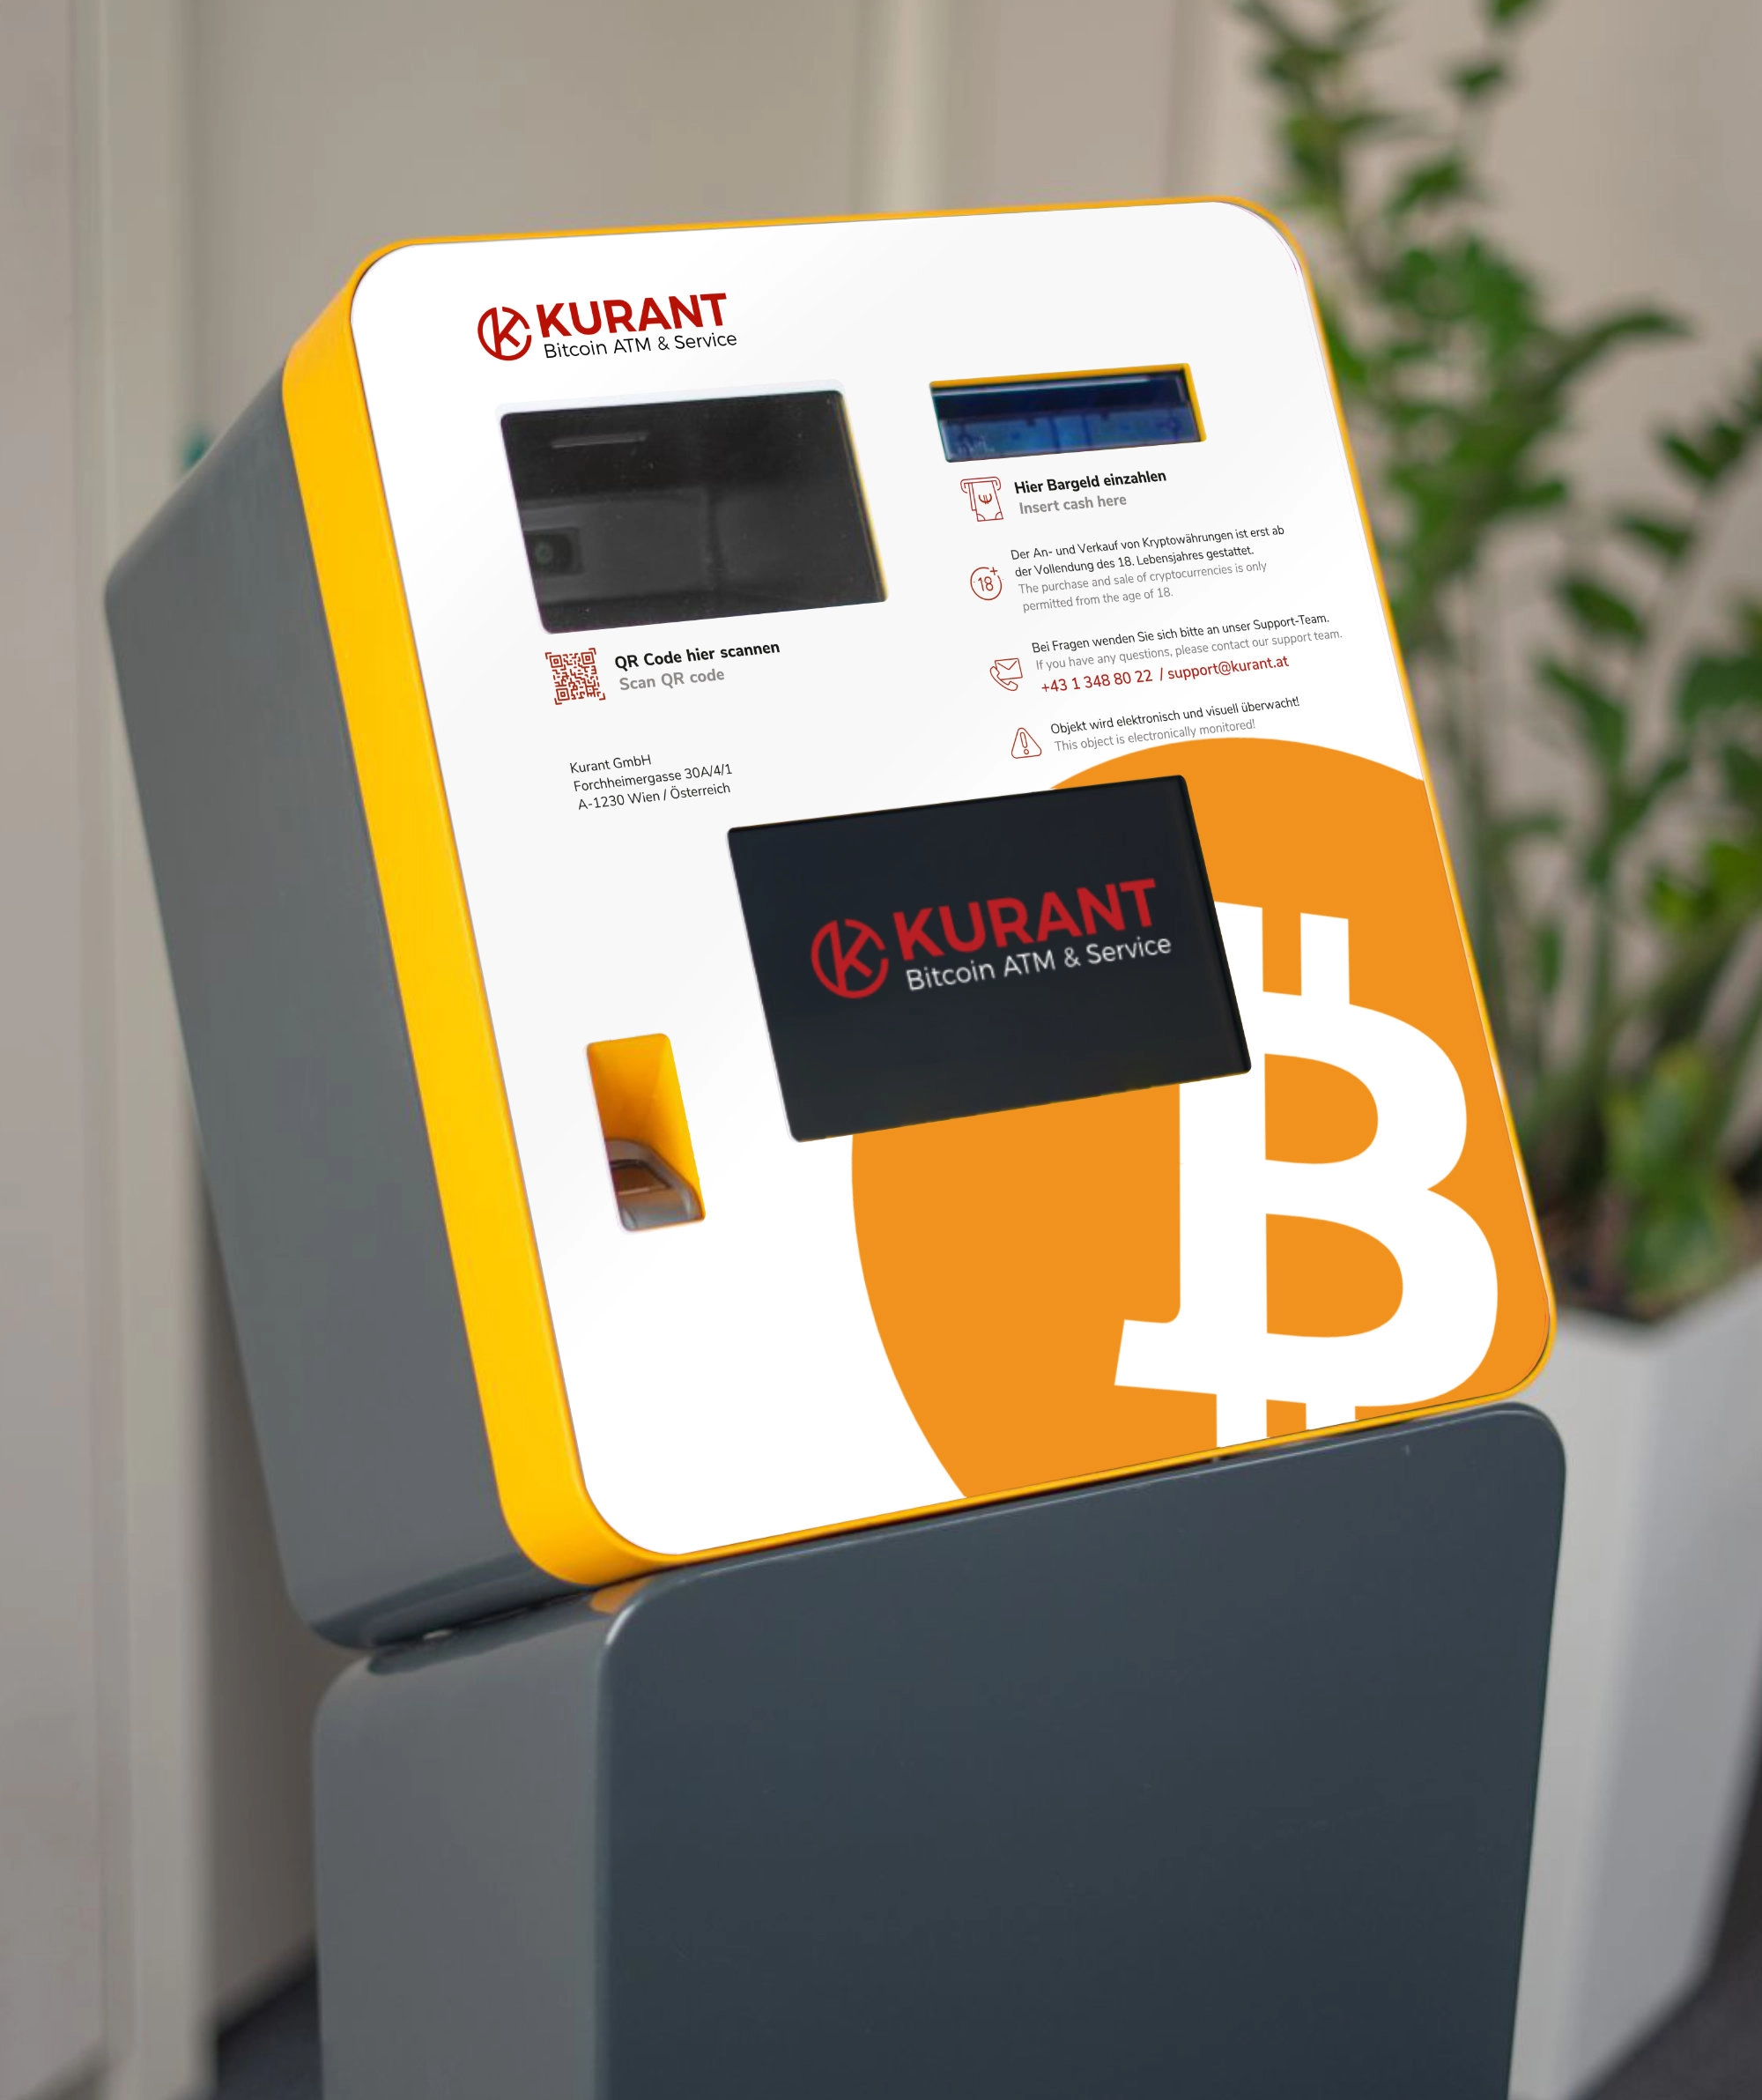 Phishing Alert: Fraudulent Bitcoin ATM Scam | Information Technology | University of Pittsburgh